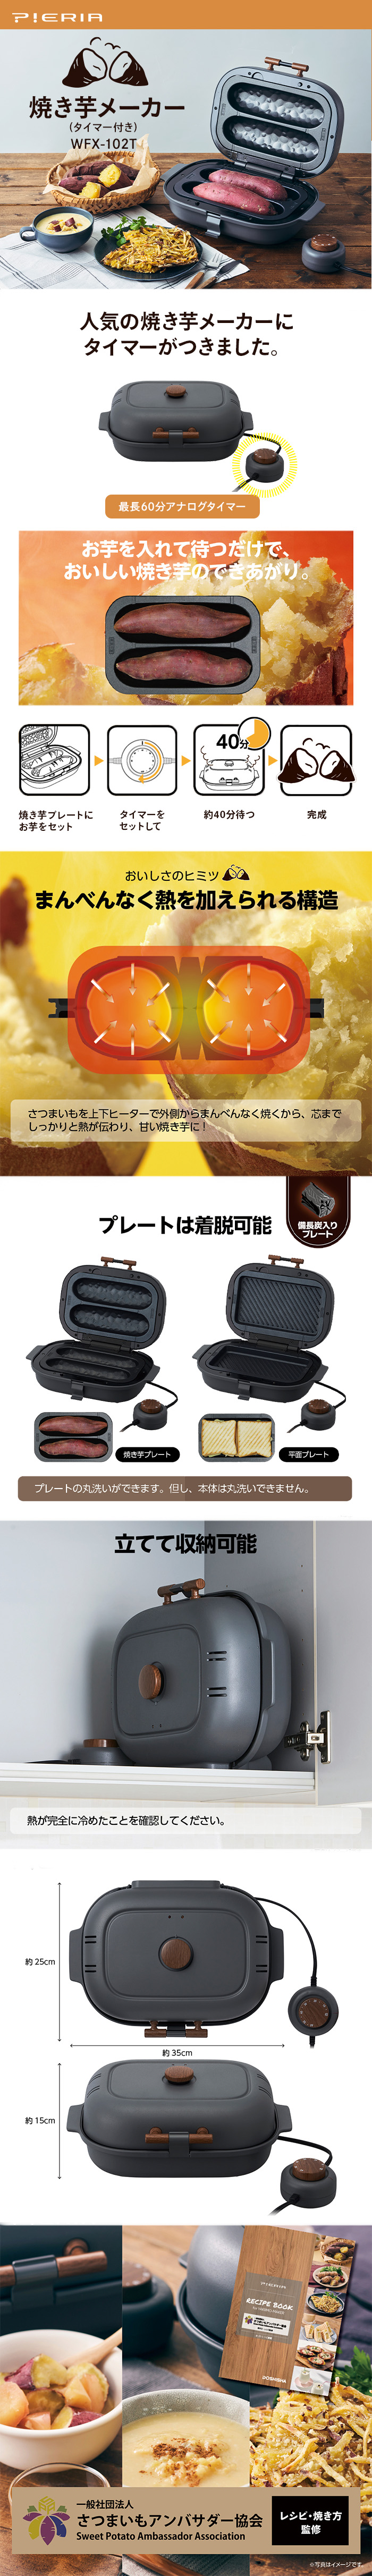 DOSHISHA 焼き芋メーカー タイマー・平面プレート付 WFX-102T